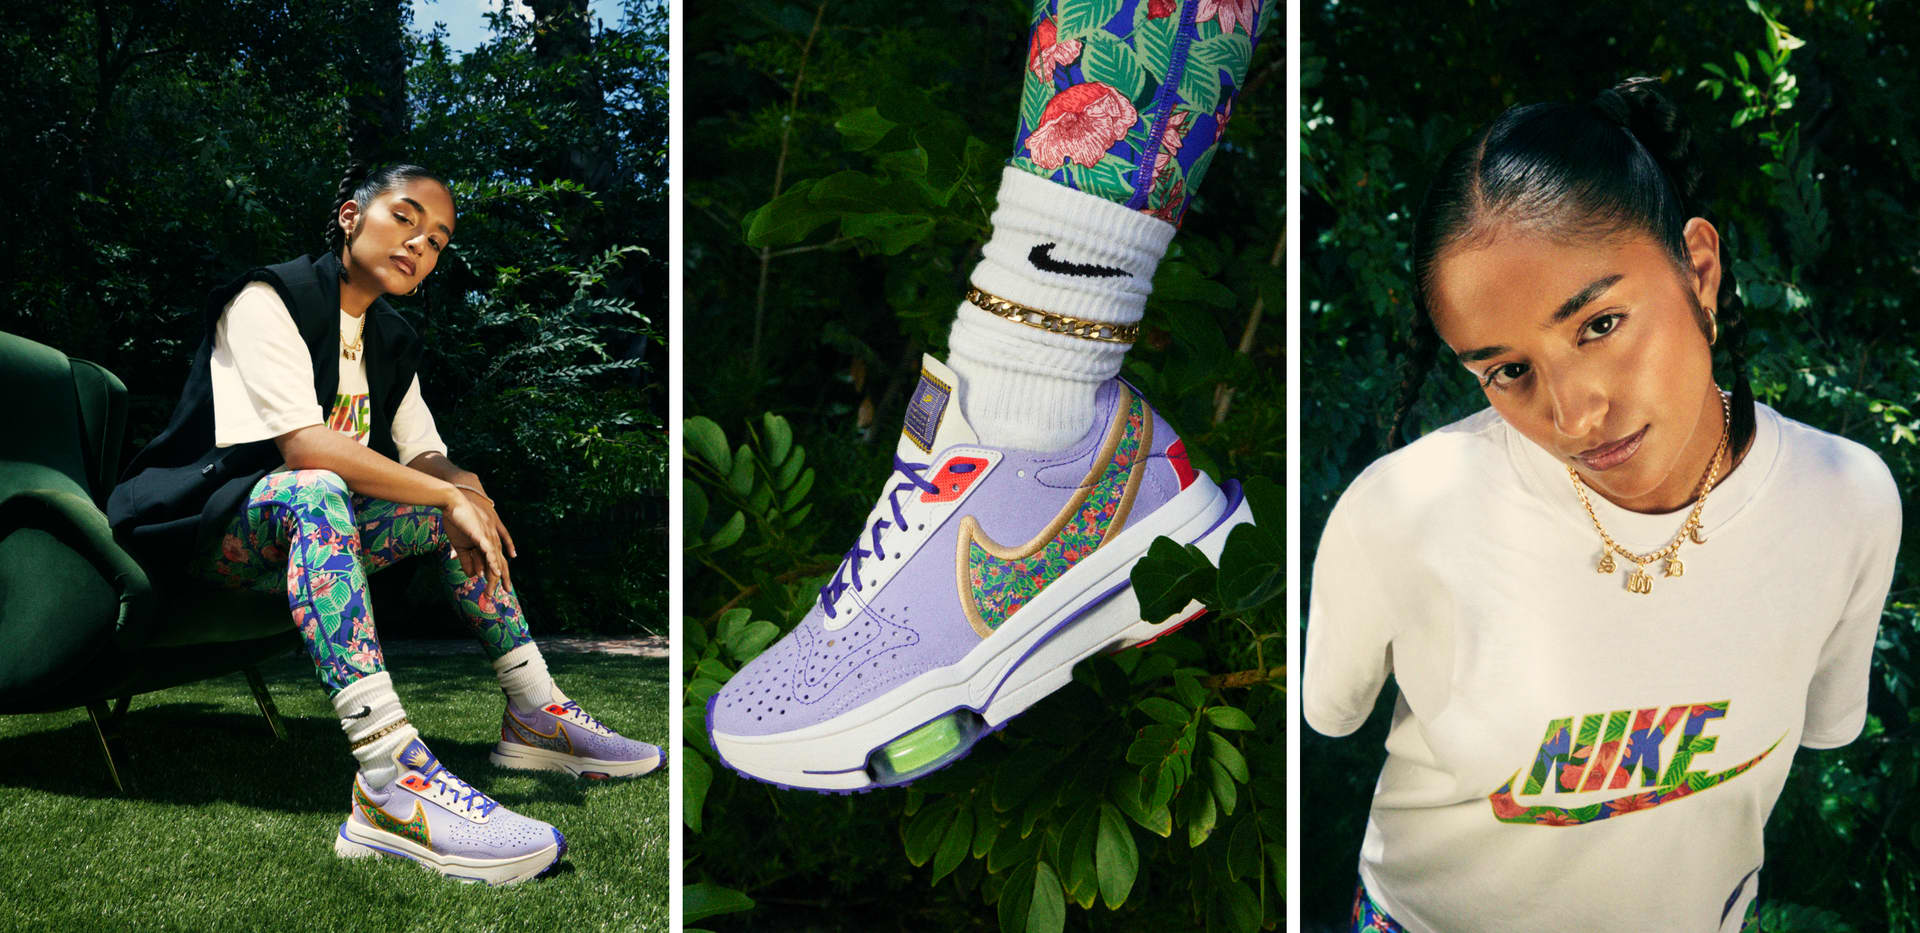  Nike Pro X Serena Design Crew Women's Long-Sleeve Tennis  Bodysuit, Brightspruce/CorePurple (Small) : Clothing, Shoes & Jewelry